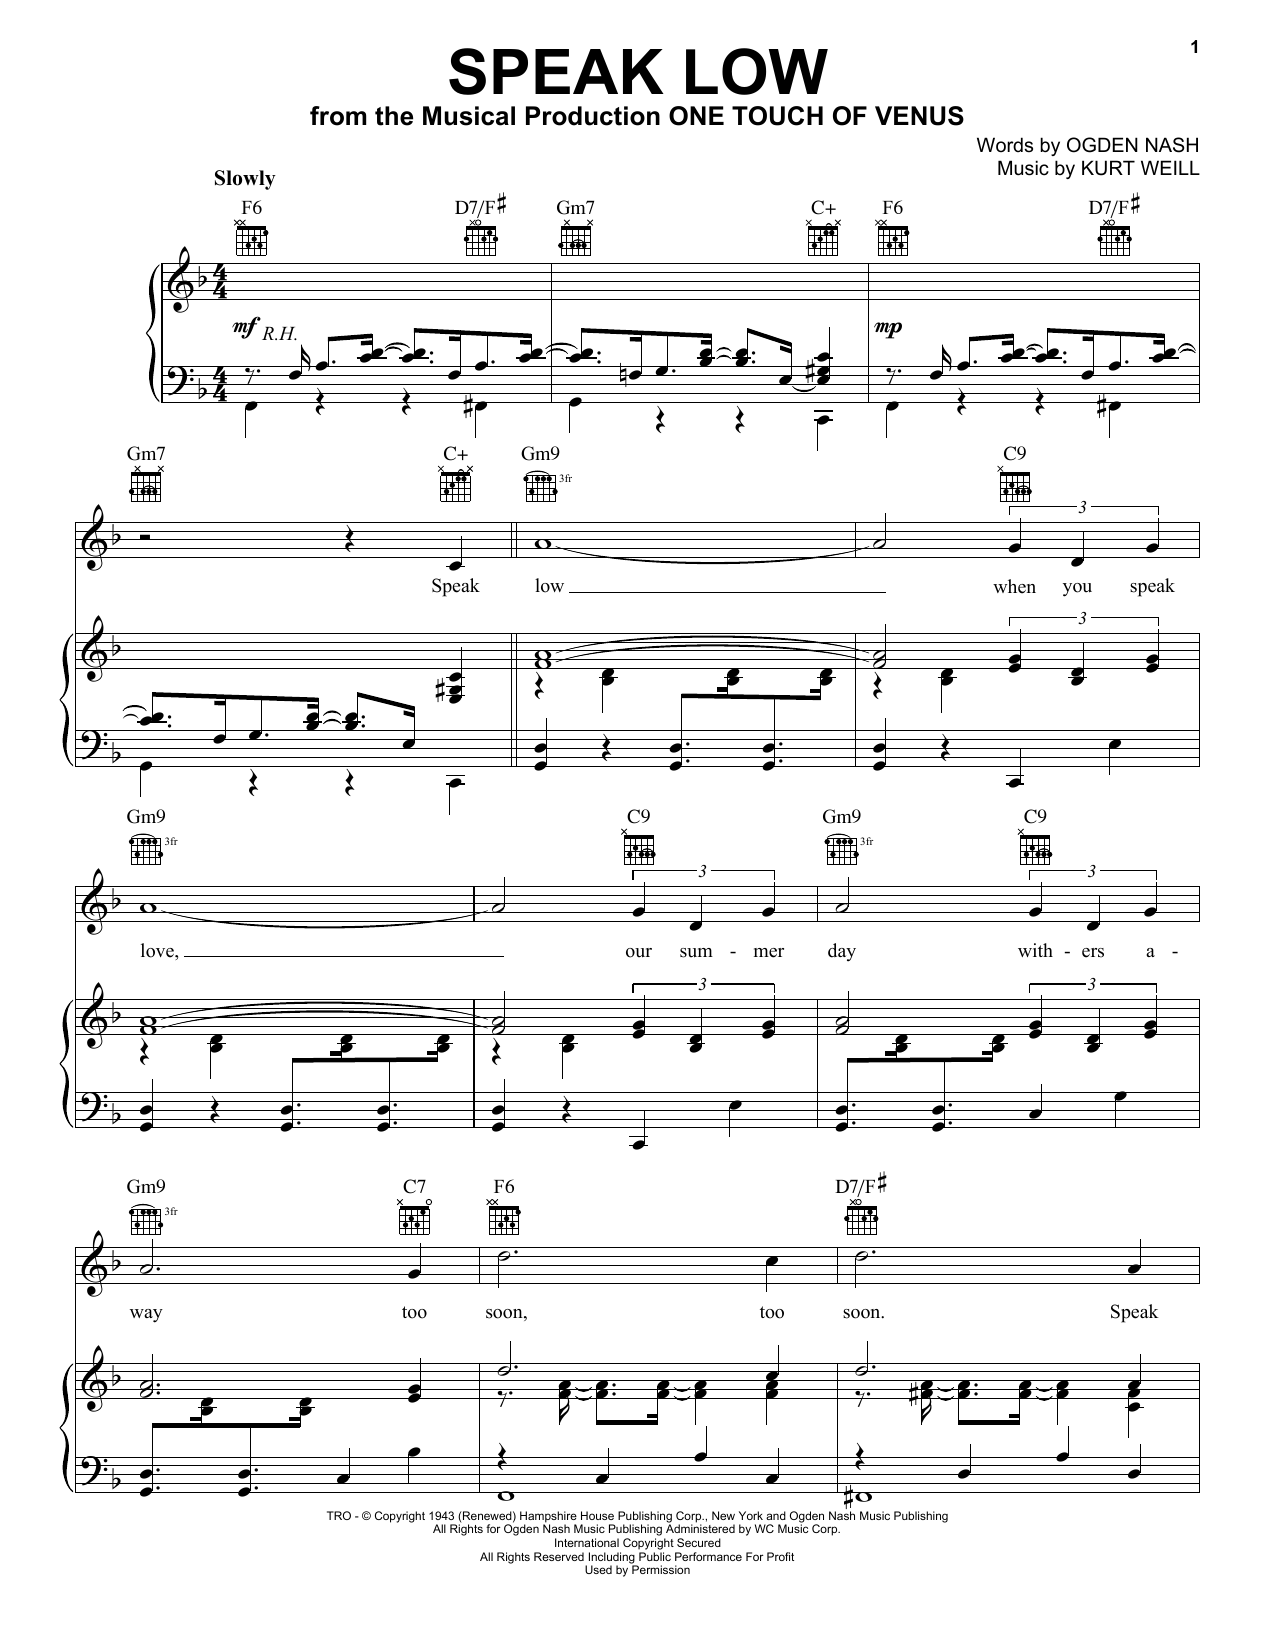 Kurt Weill Speak Low Sheet Music Notes & Chords for Tenor Saxophone - Download or Print PDF